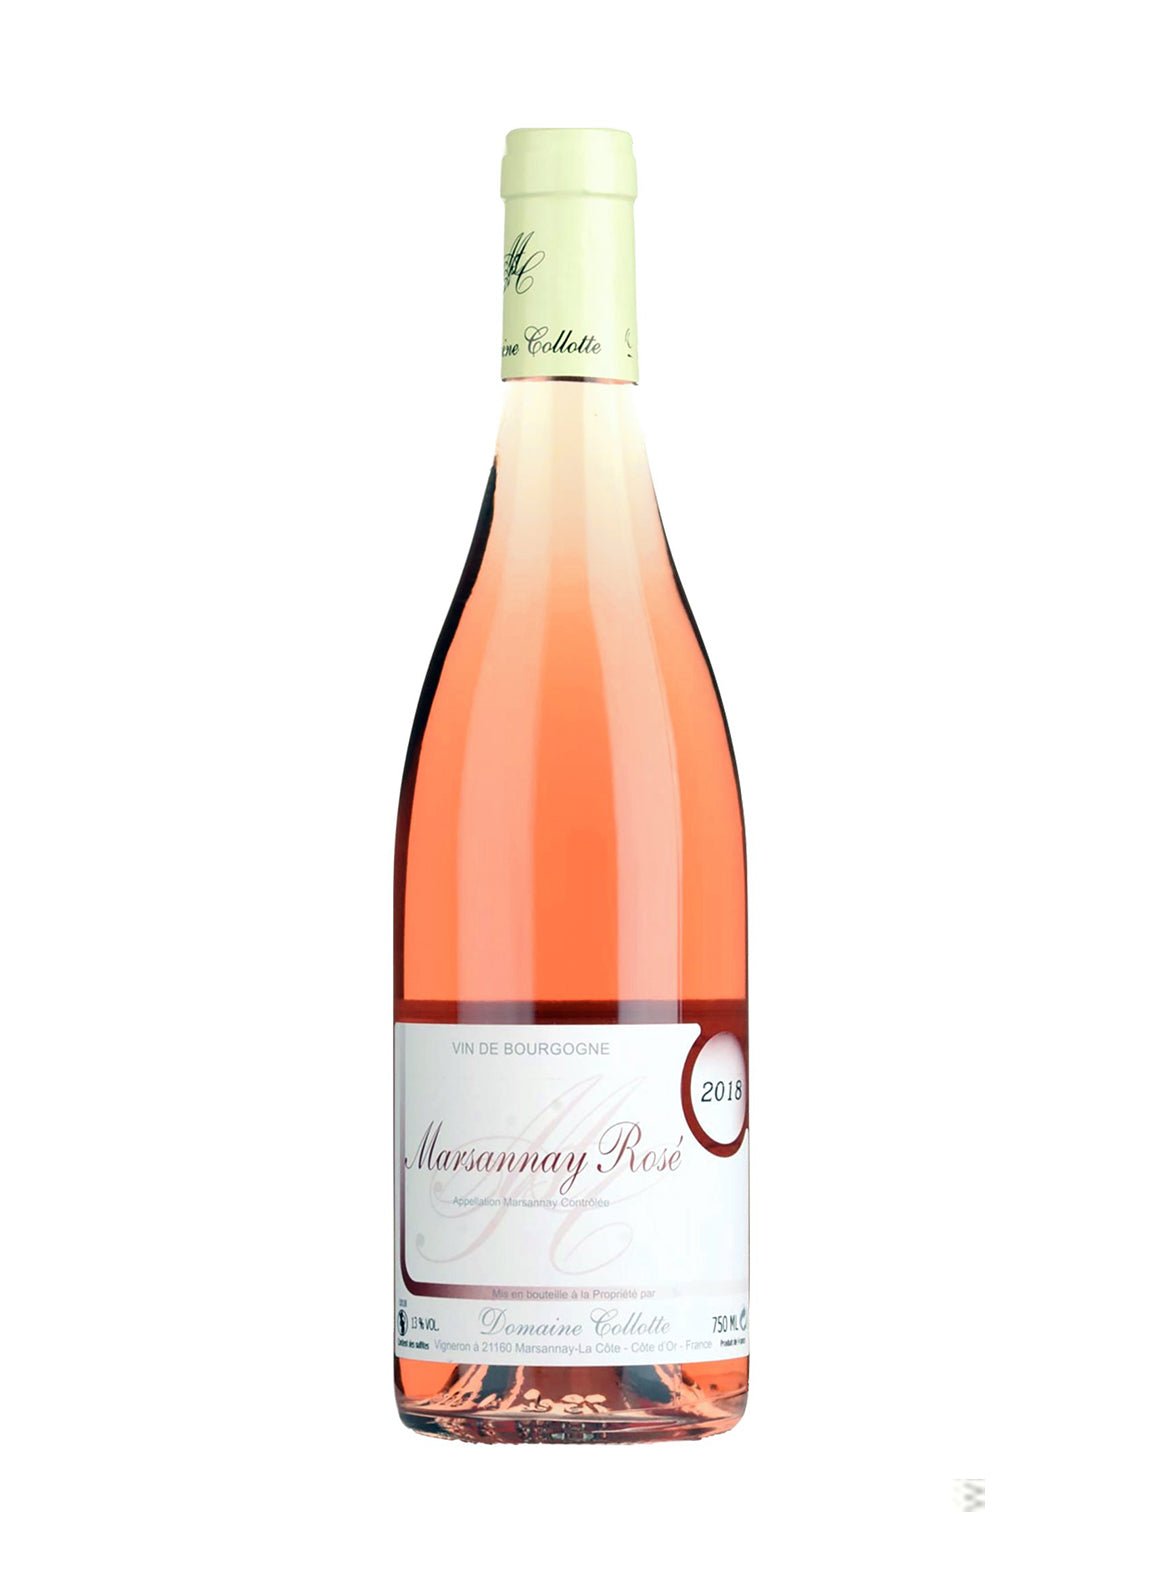 Domaine Collotte Marsannay Rose 2019 - Wine France Rose - Liquor Wine Cave